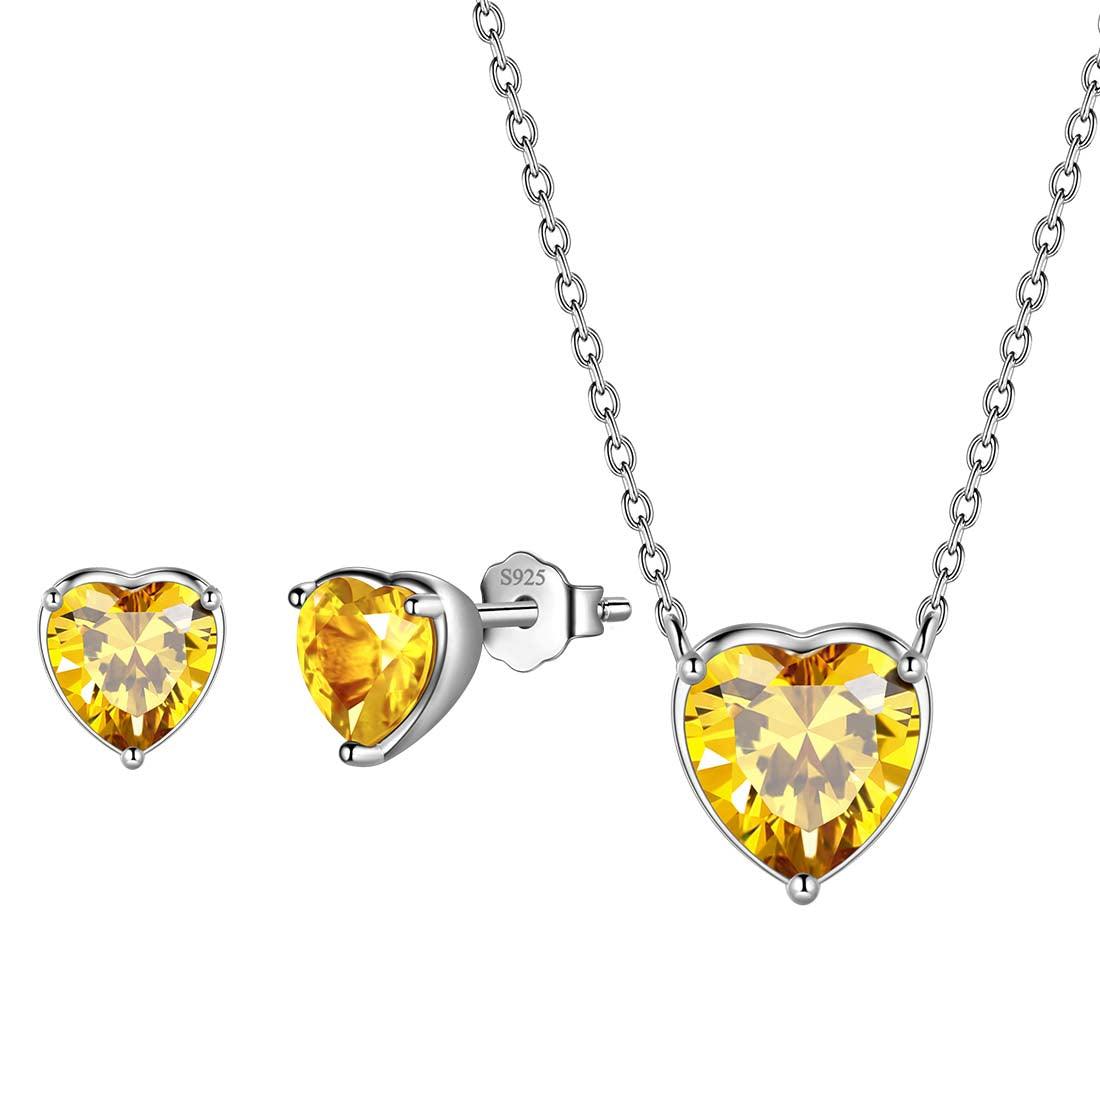 Women Hearts Jewelry Sets 3PCS Sterling Silver - Jewelry Set - Aurora Tears Jewelry